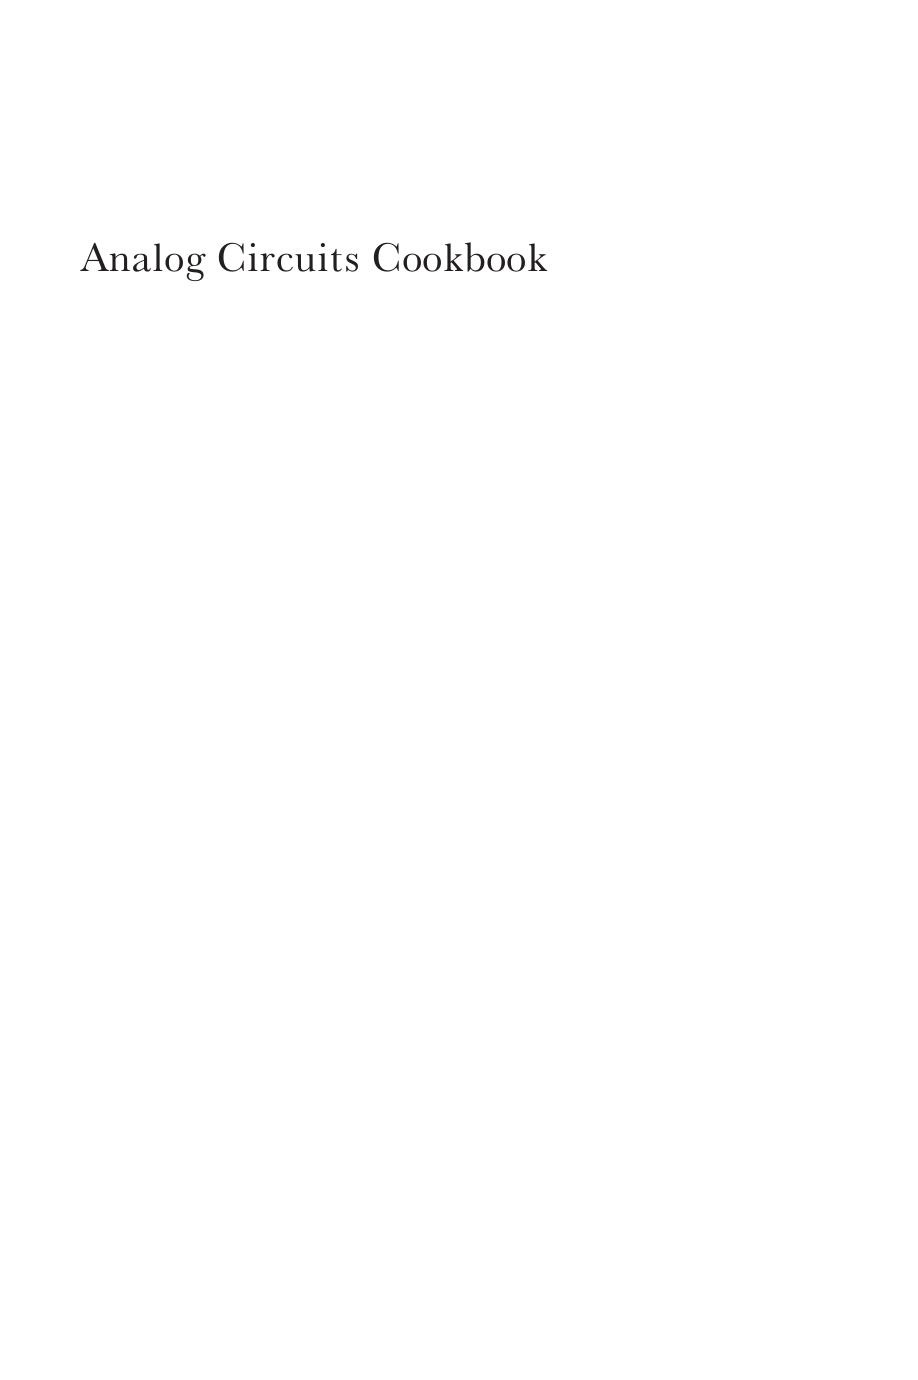 Analog-Circuits-Cookbook 2nd ed. 1999.pdf